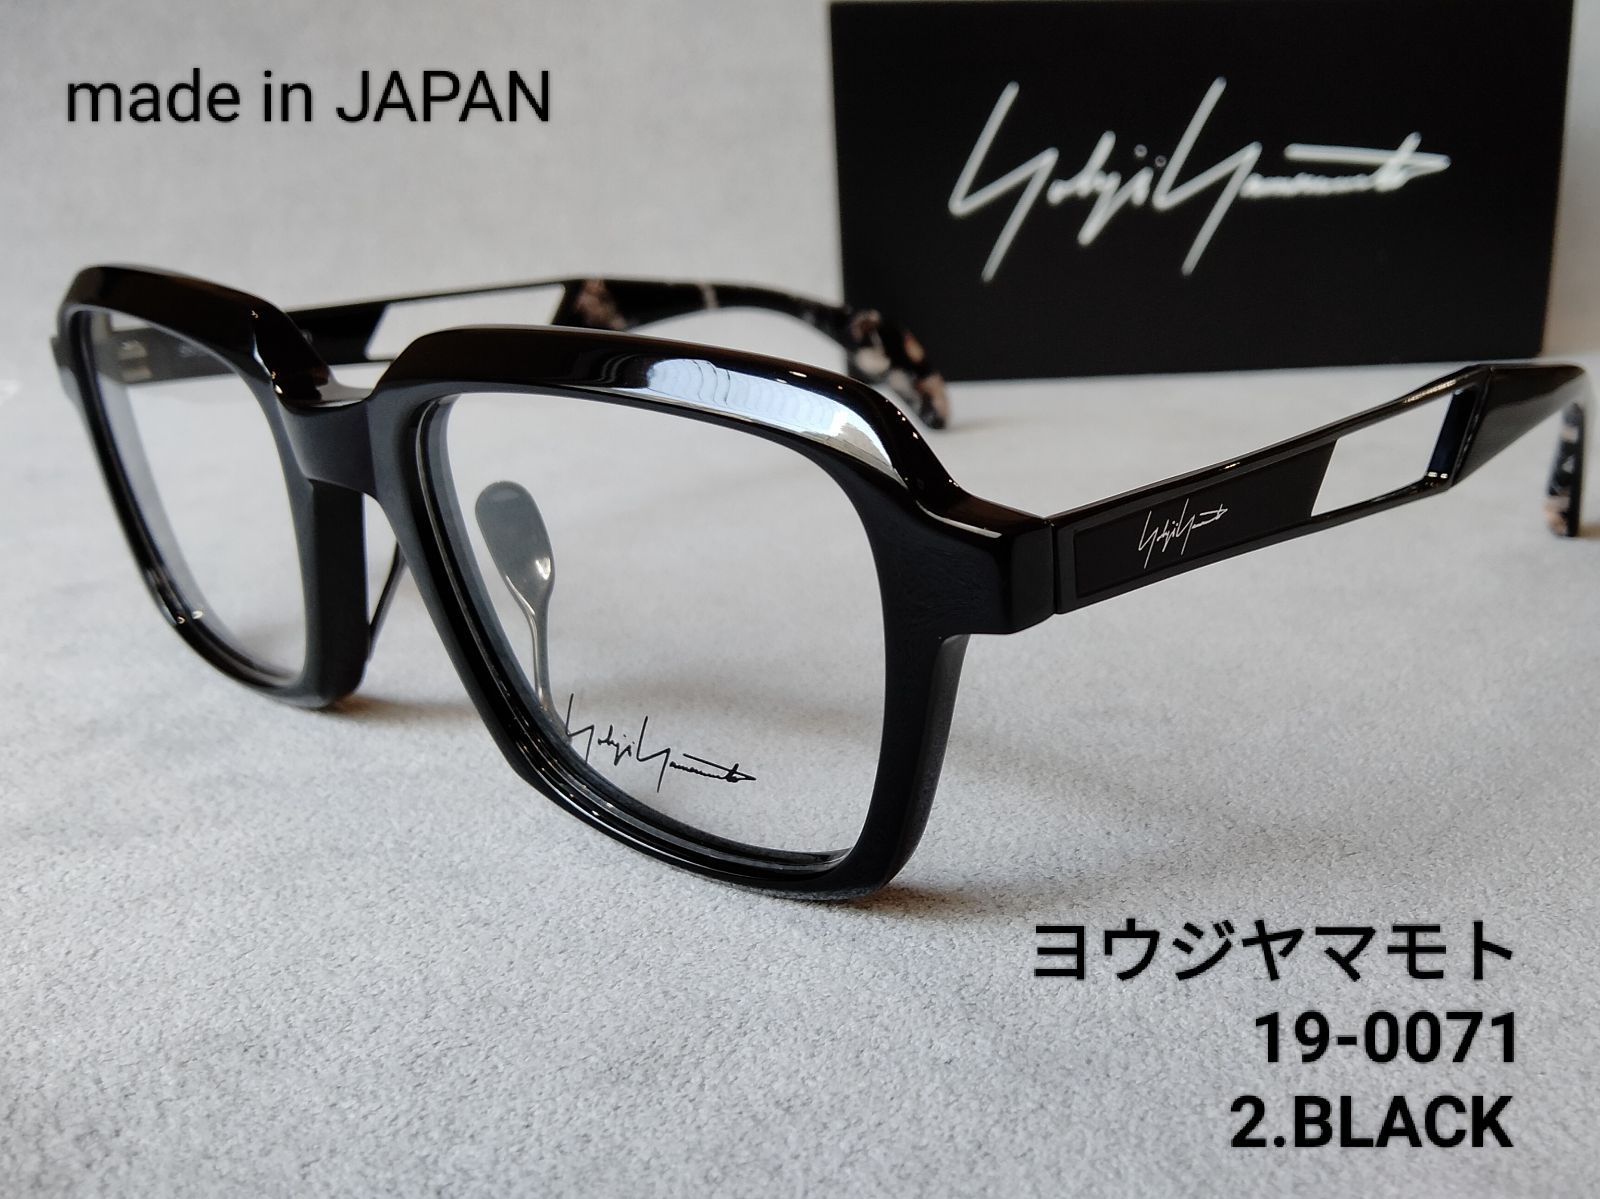 YOHJI YAMAMOTO(ヨウジヤマモト) EYEWEAR19-0071/2.BLACK - メガネ